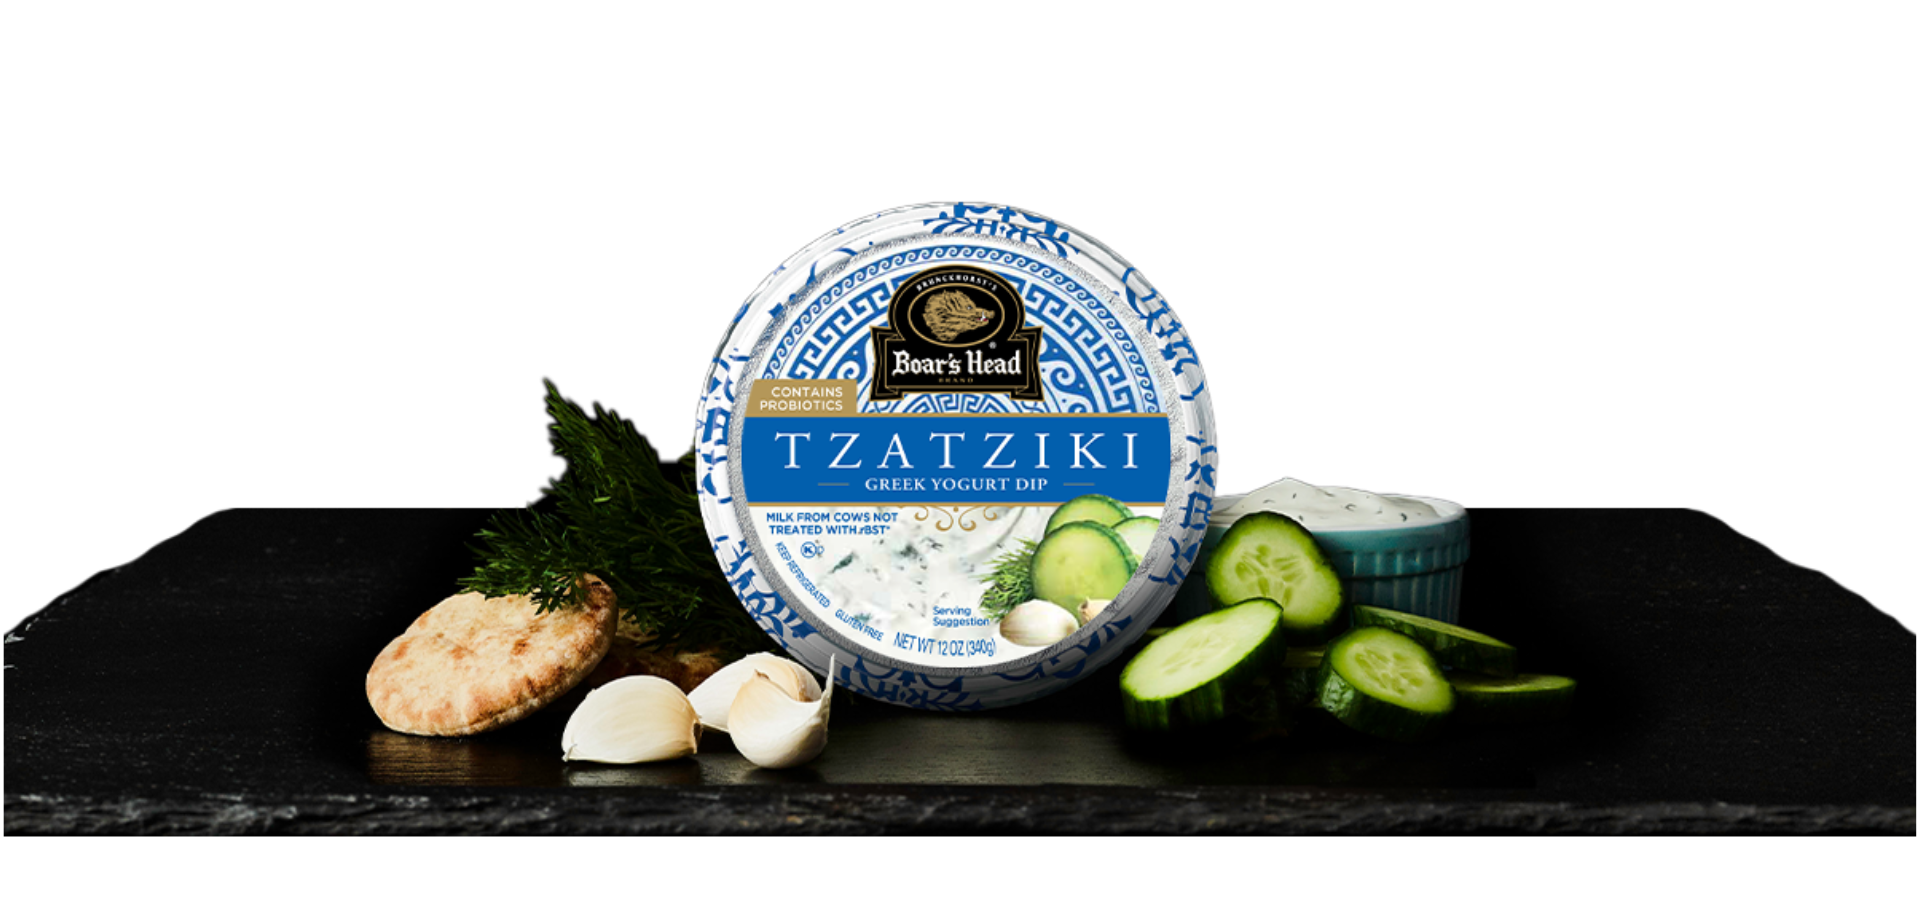 View of Tzatziki Greek Yogurt Dip Packaging